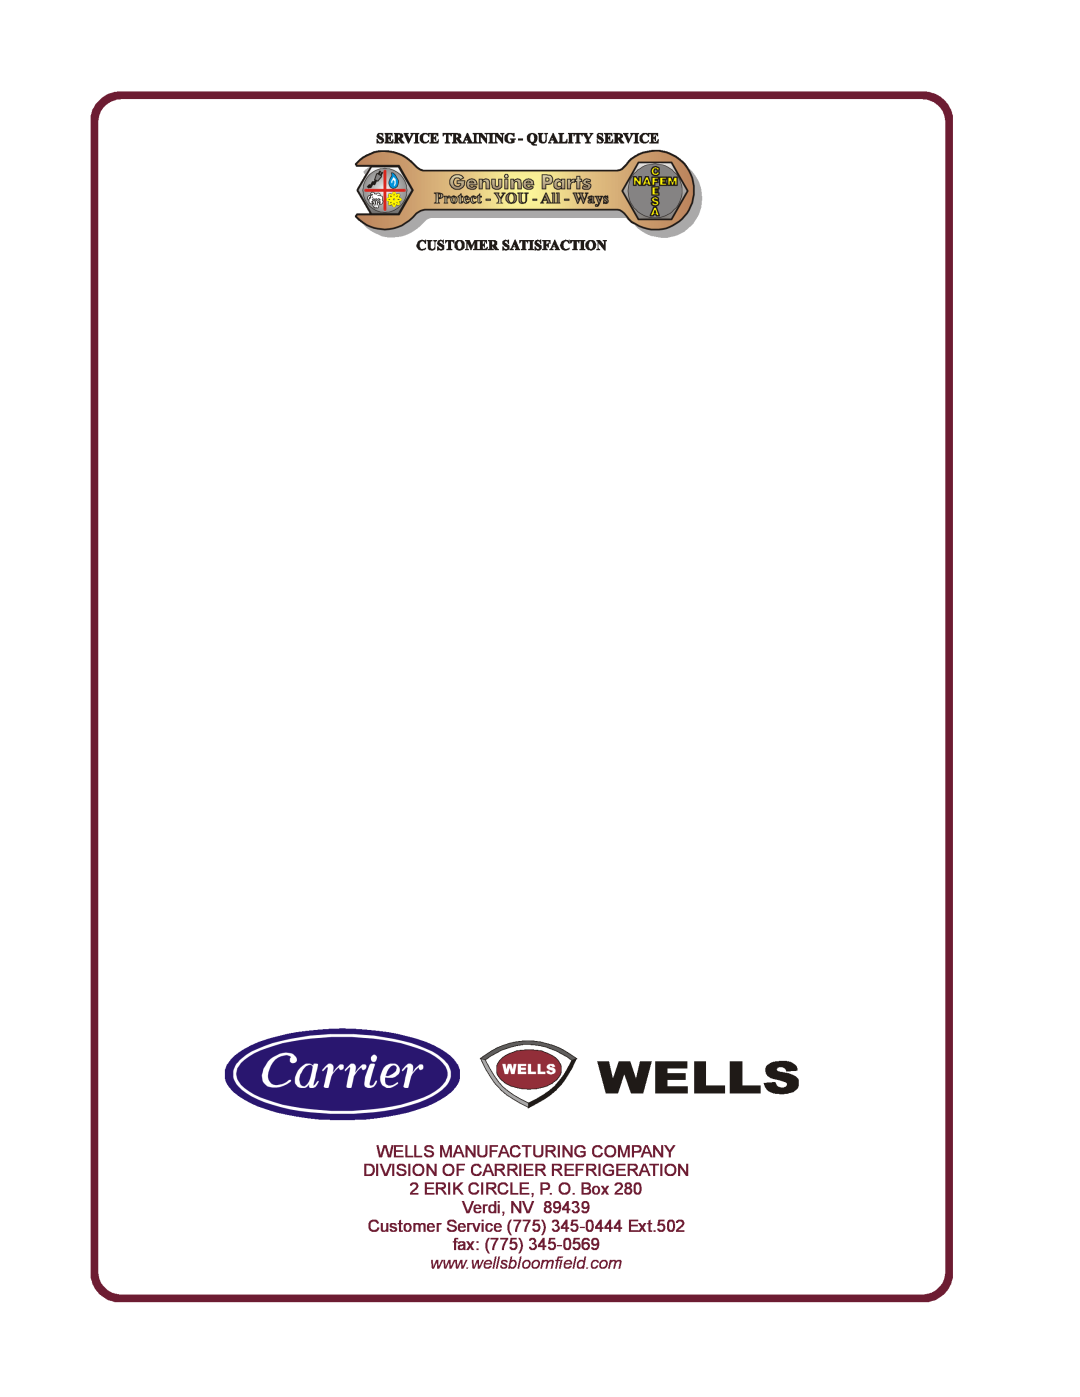 Wells F-49, F-67, F-55 Wells Manufacturing Company, Division Of Carrier Refrigeration, ERIK CIRCLE, P. O. Box Verdi, NV 